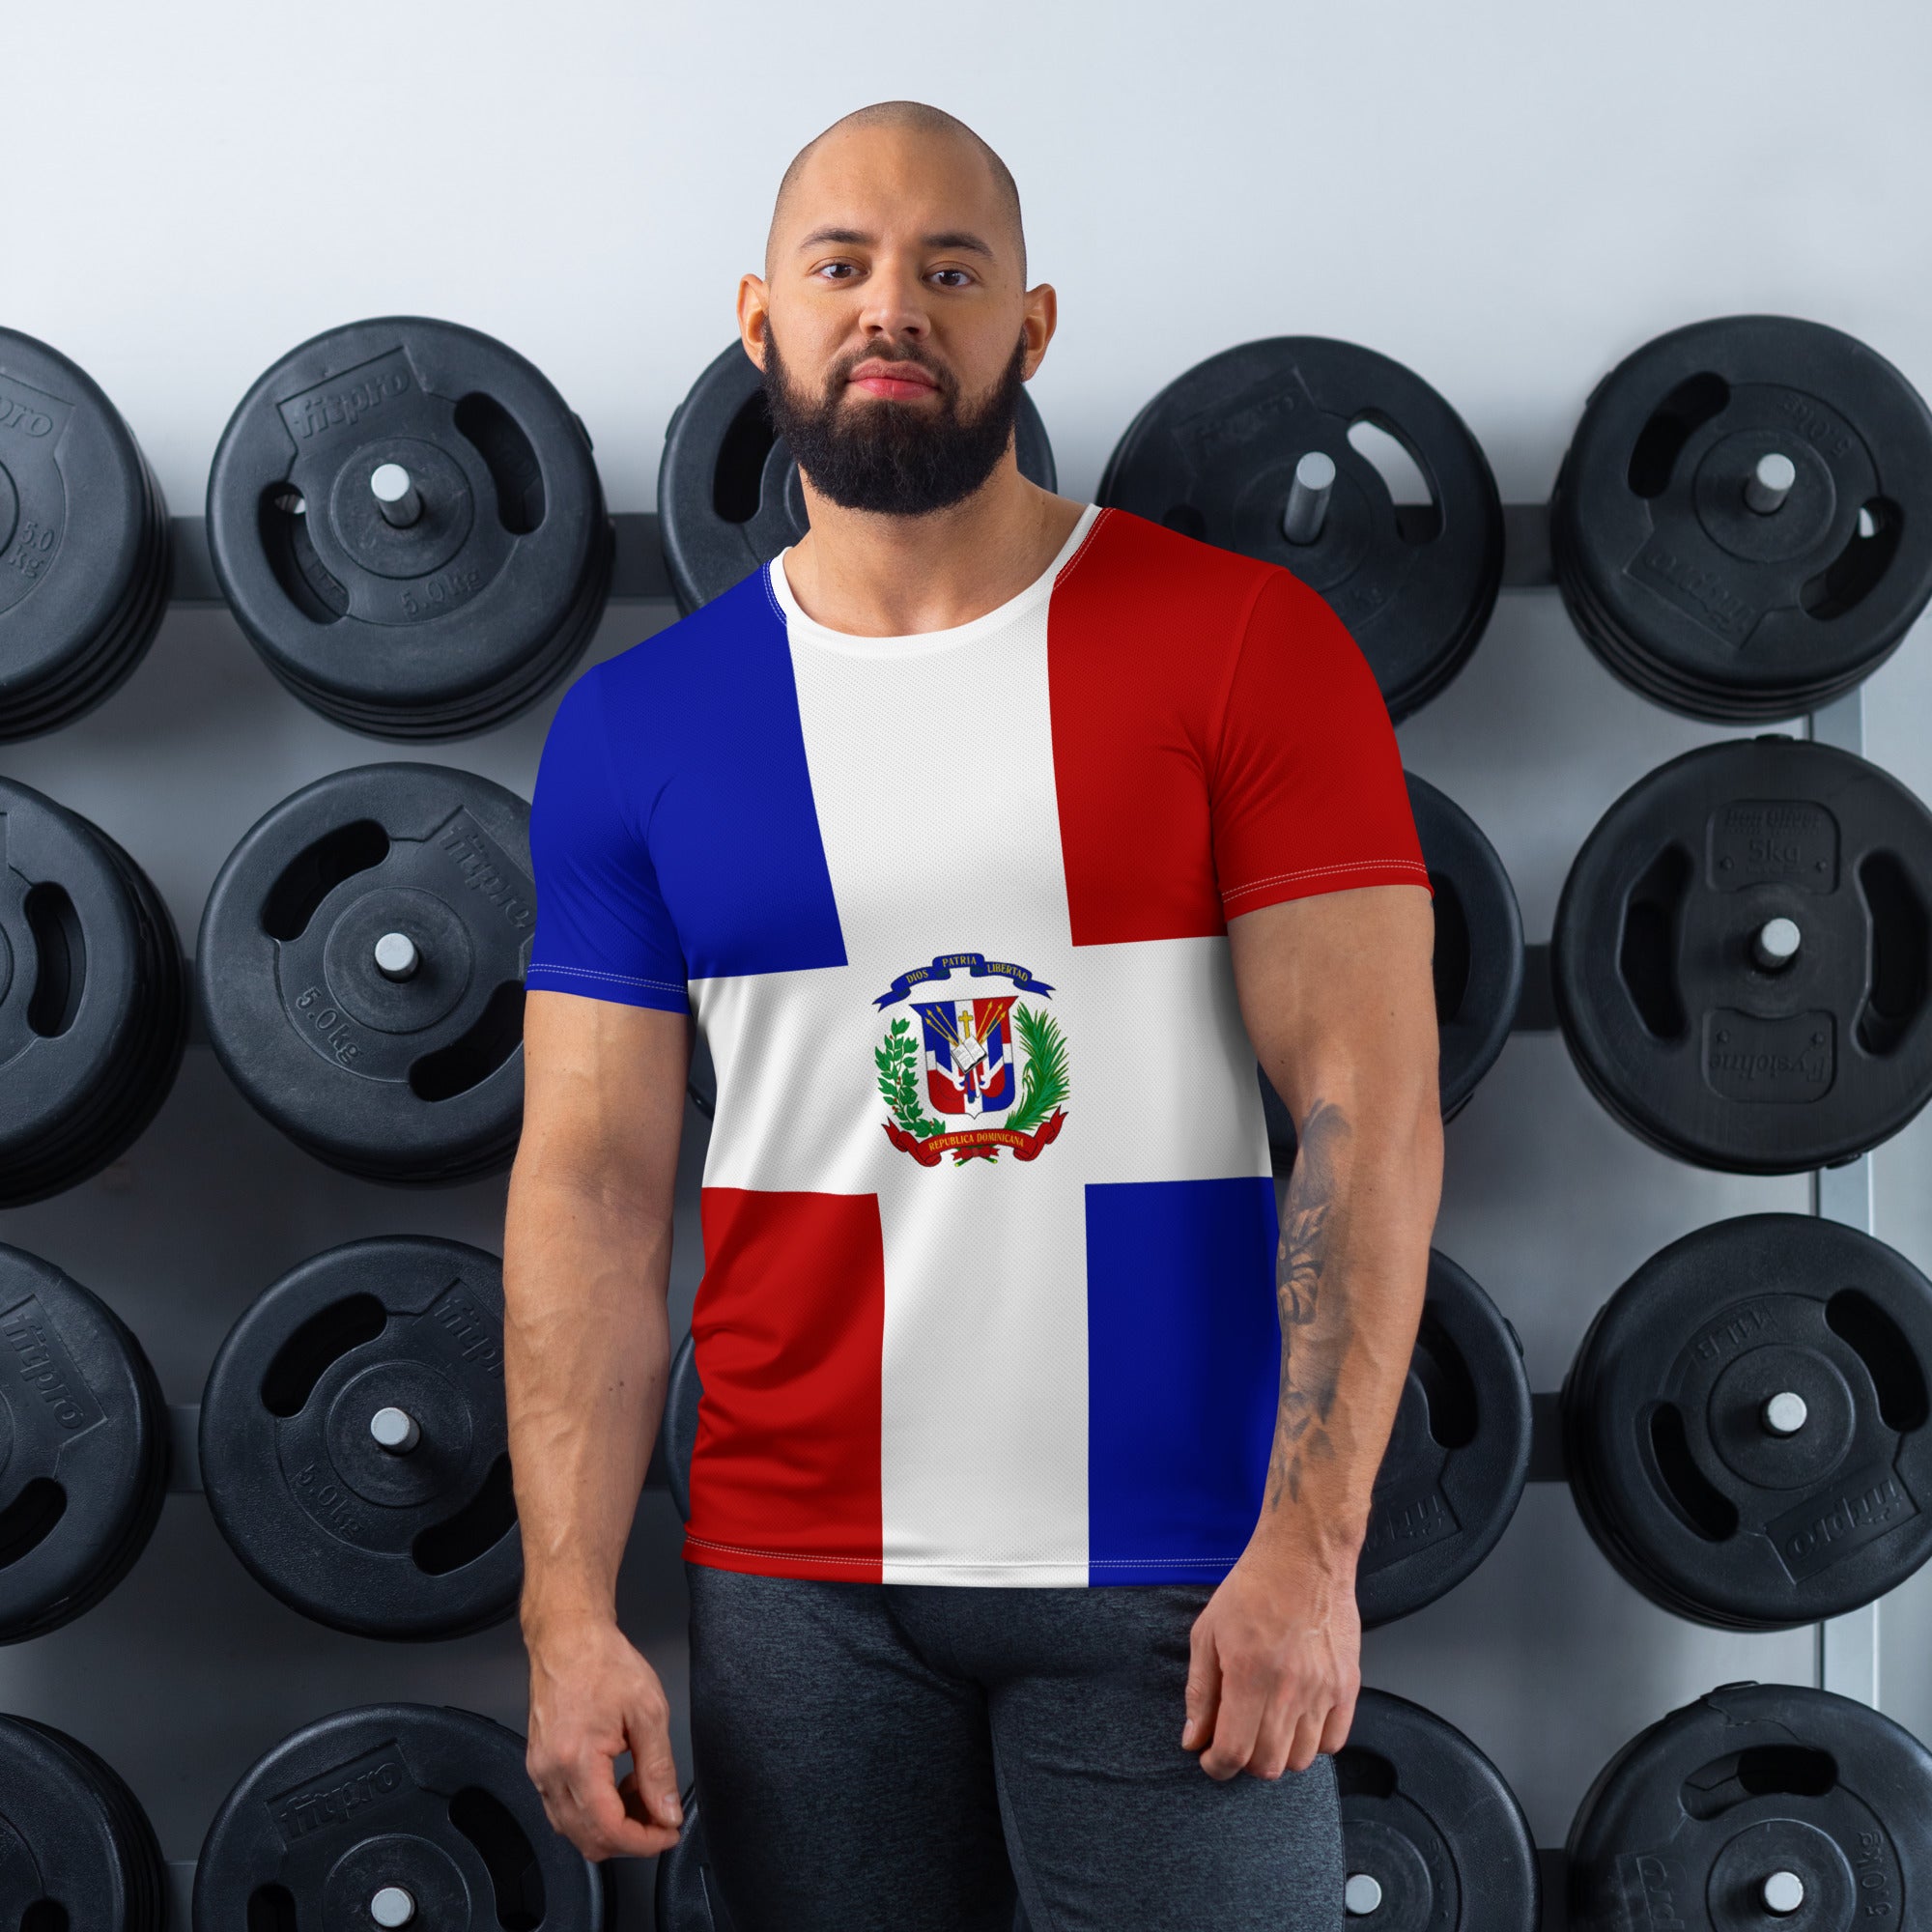 Dominican Republic - Men's Athletic T-shirt